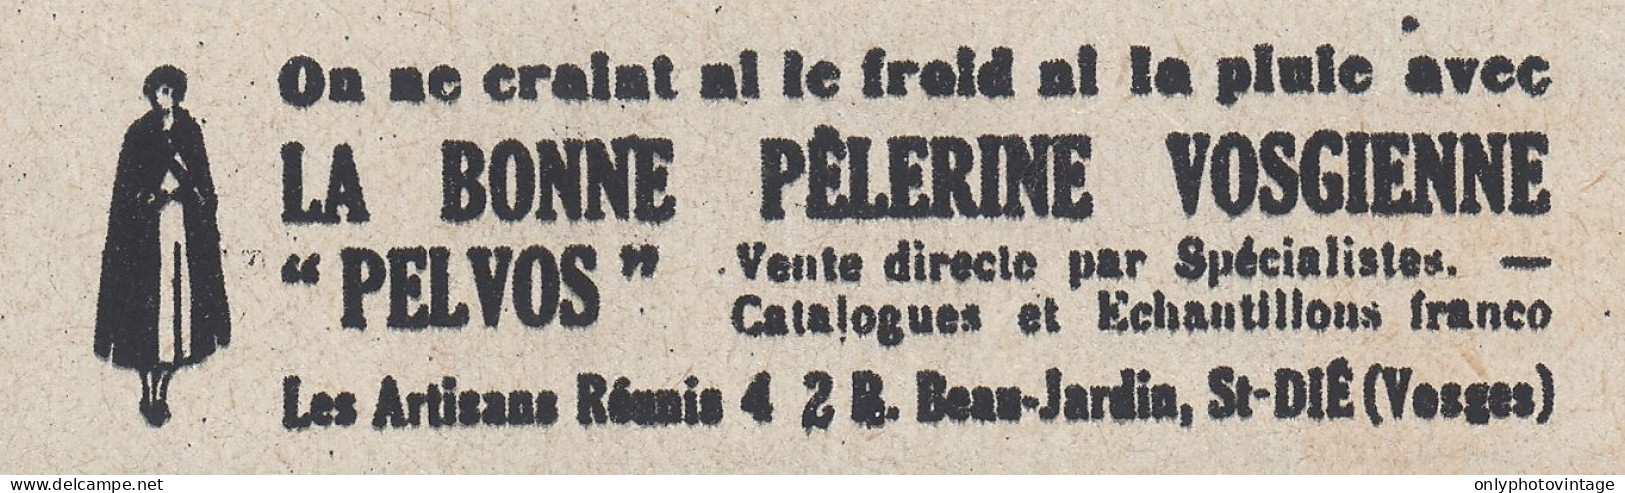 P�lerine Vosgienne Pelvos - 1936 Vintage Advertising - Pubblicit� Epoca - Werbung